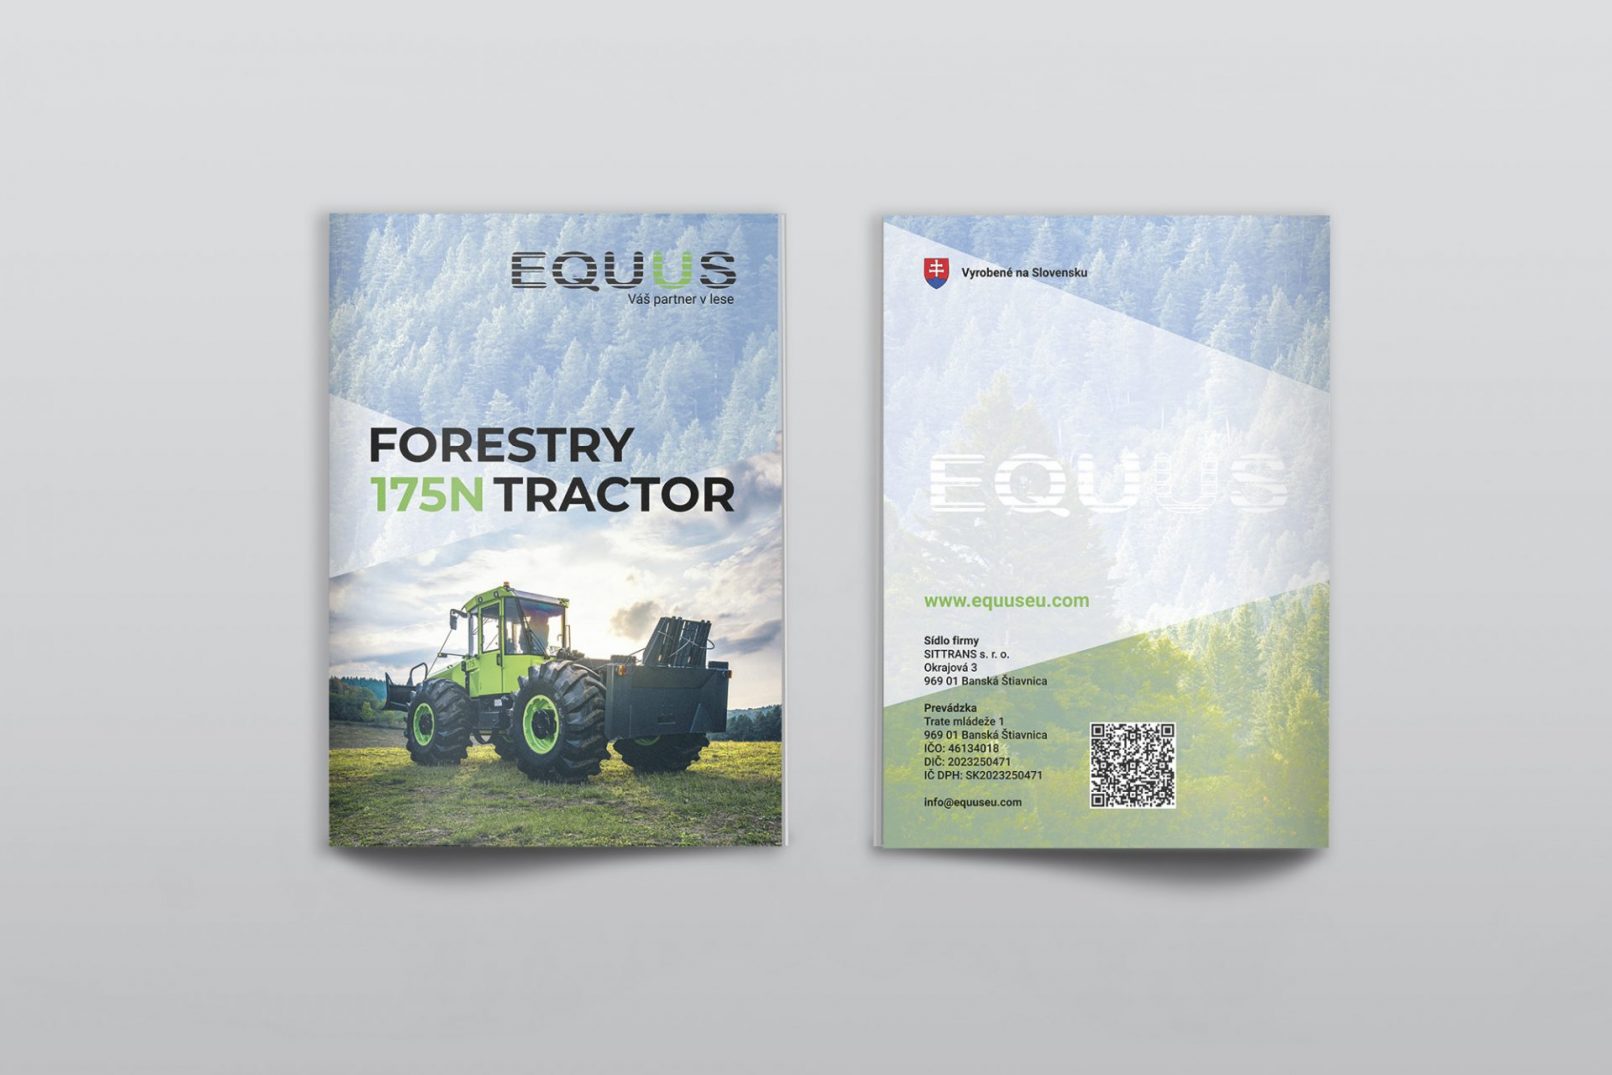 Obálka katalógu o traktoroch pre firmu EQUUS.